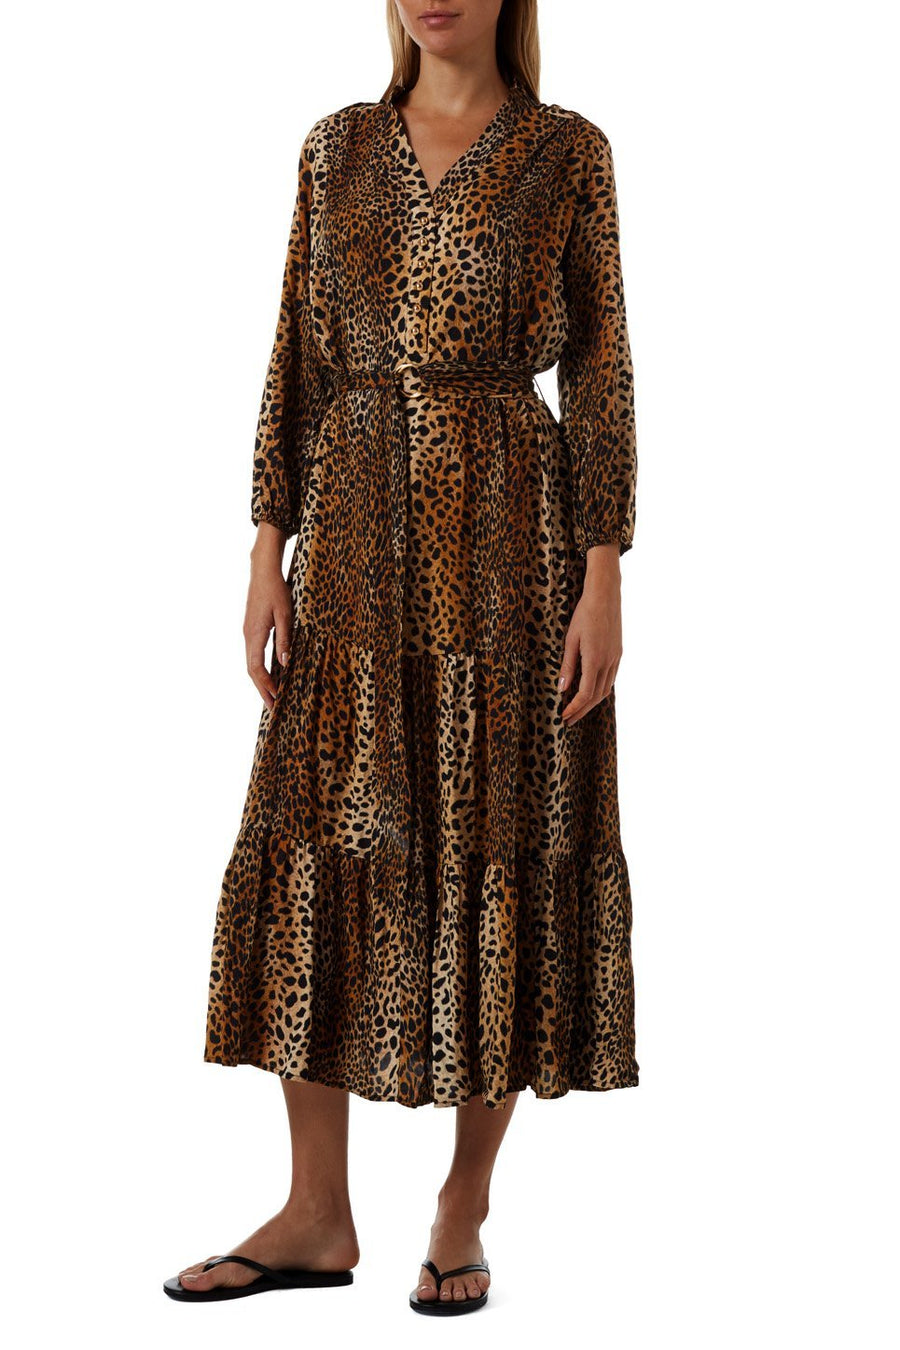 Sonja Cheetah Print Dress